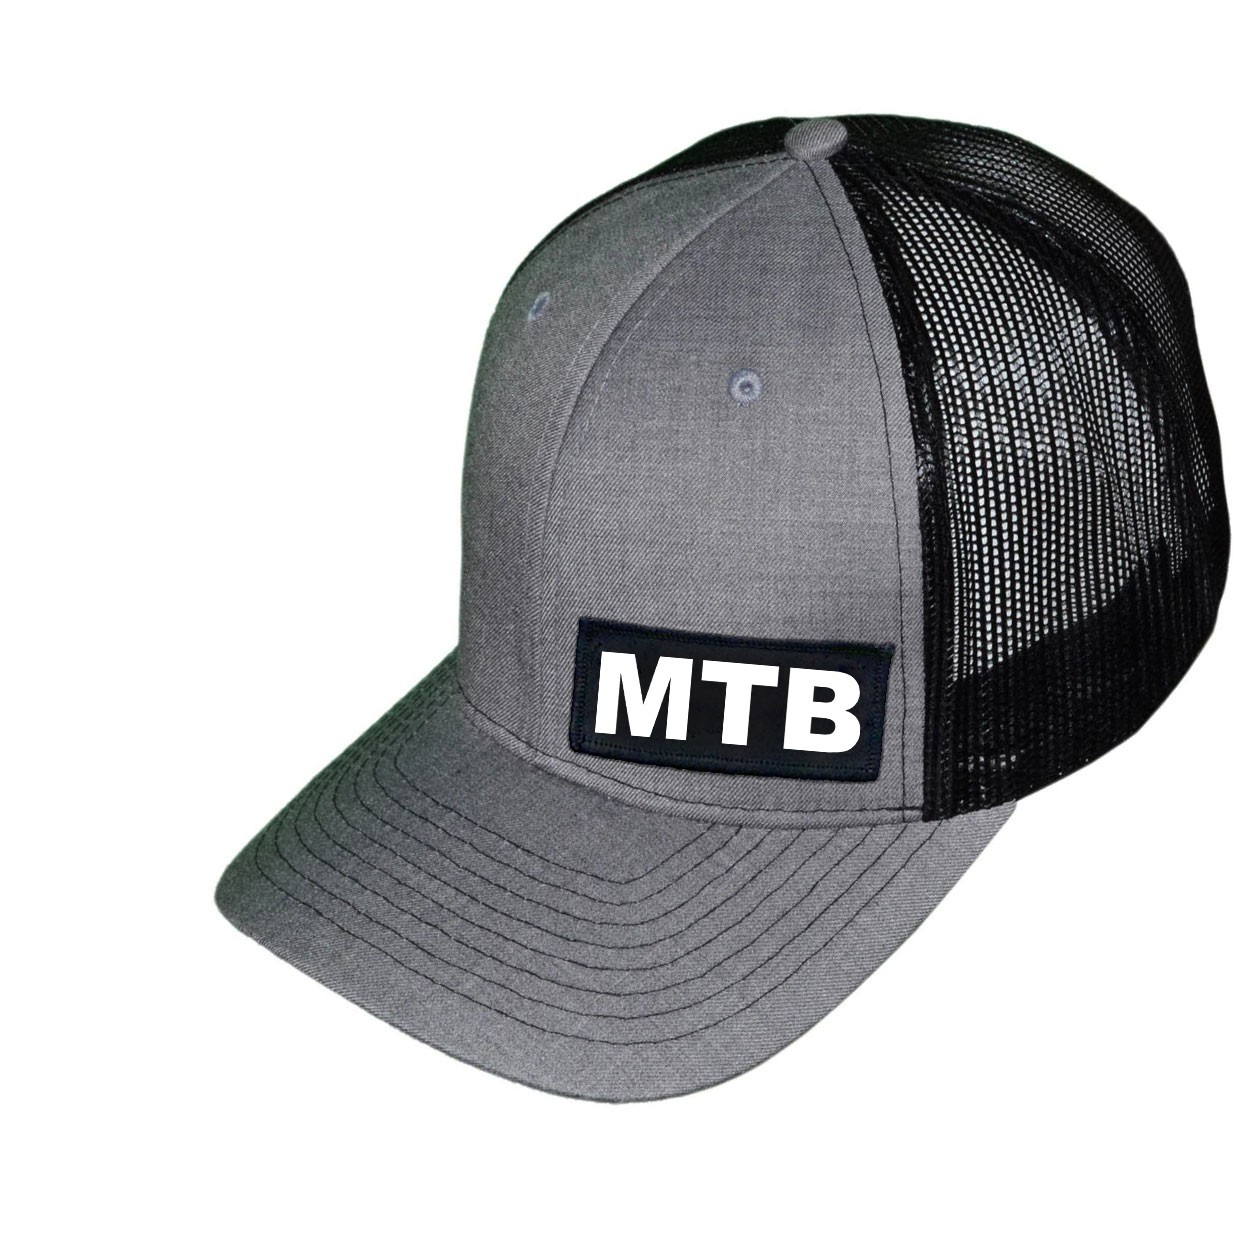 Mtb Brand Logo Night Out Woven Patch Snapback Trucker Hat Heather Gray/Black